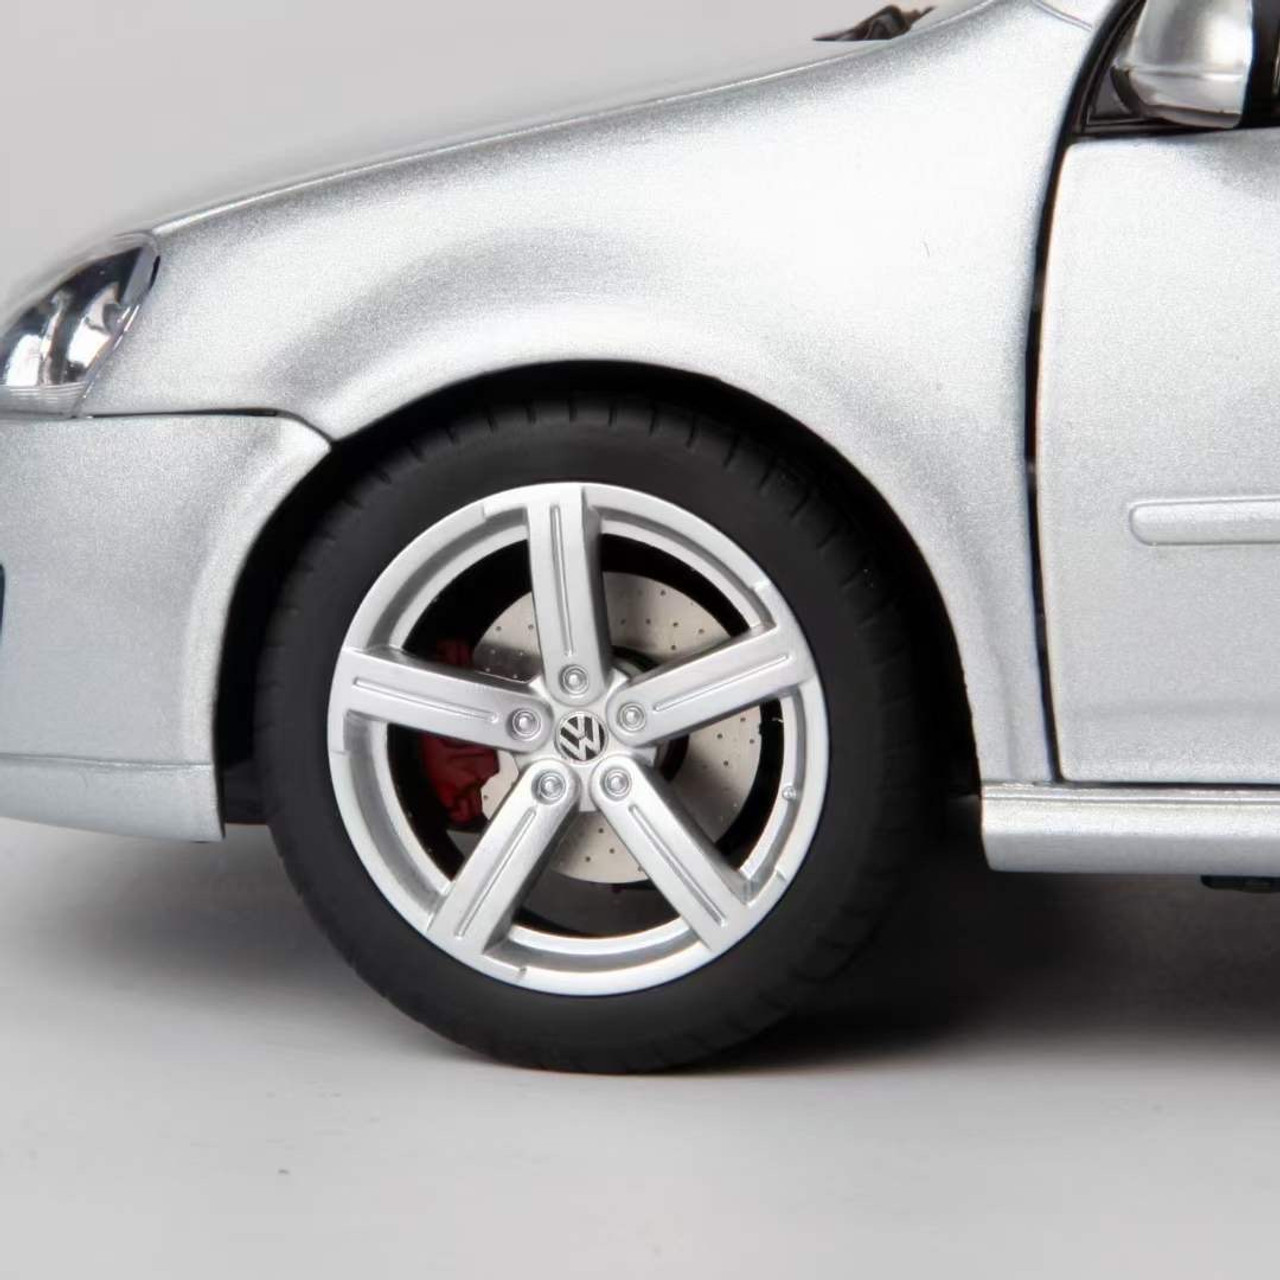 1/18 Norev 2007 Volkswagen VW Golf GTI Pirelli (Silver) Diecast Car Model